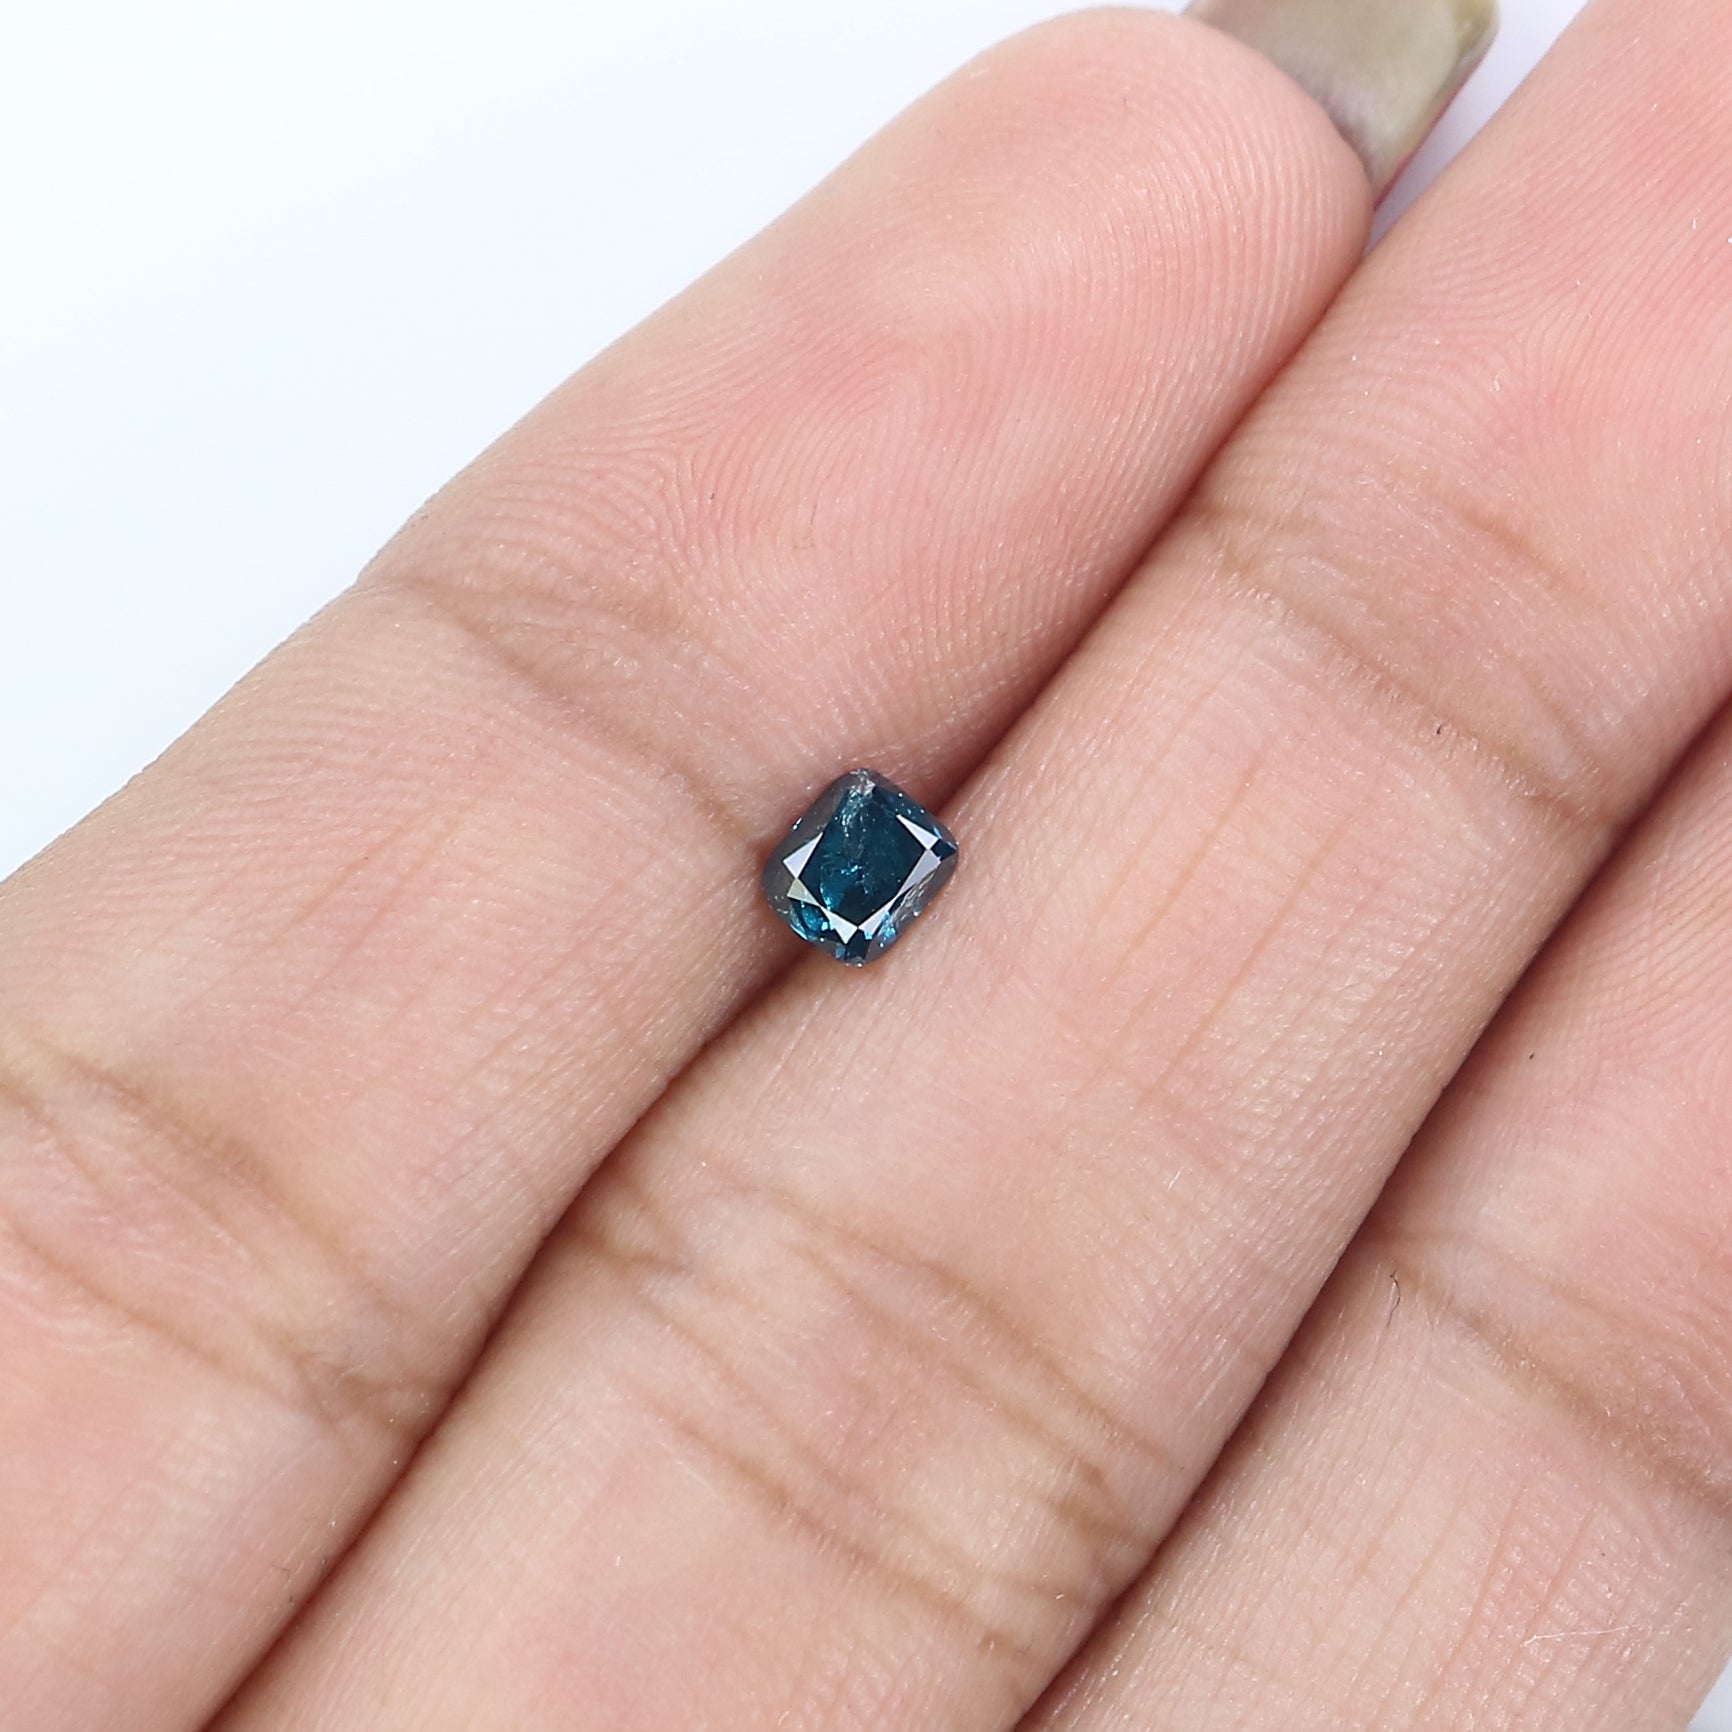 Natural Loose Cushion Diamond, Blue Color Diamond, Natural Loose Diamond, Cushion Rose Cut Diamond, 0.27 CT Cushion Shape Diamond L4388